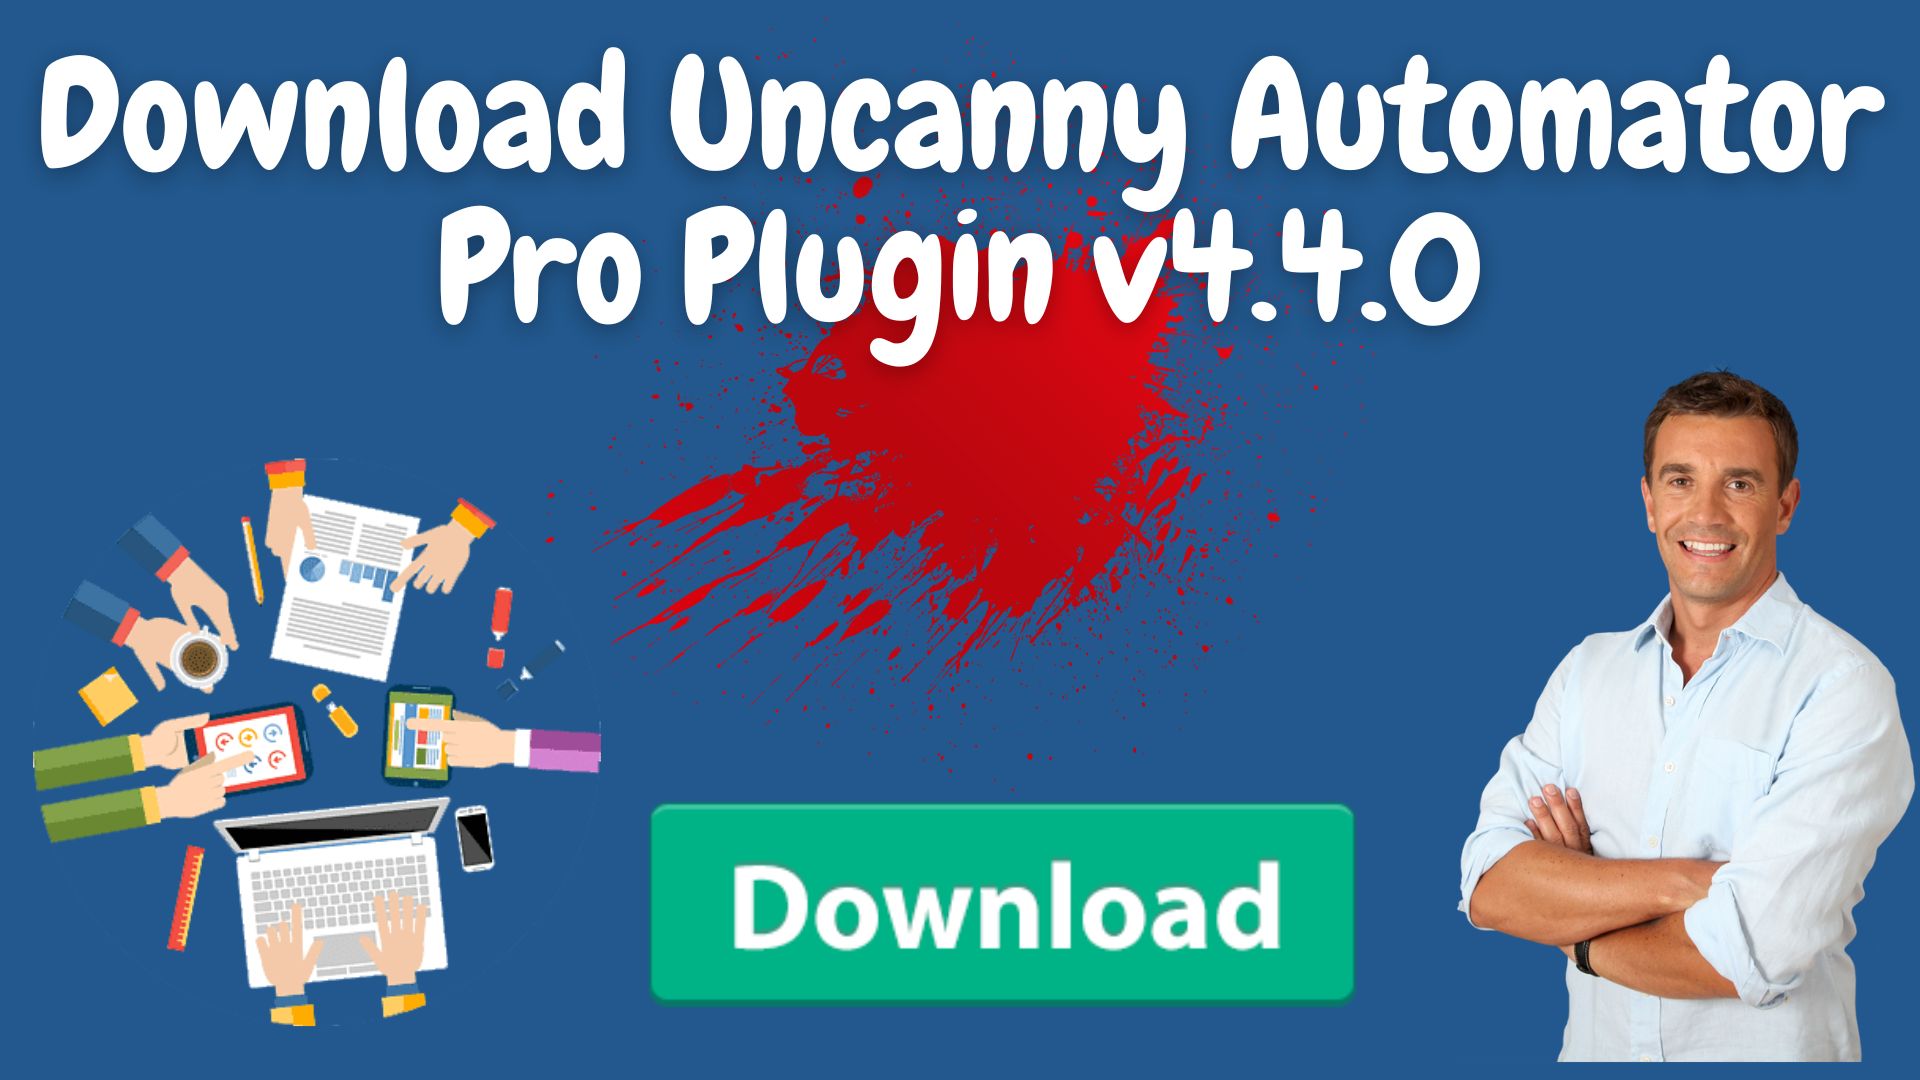 Download uncanny automator pro plugin v4. 4. 0